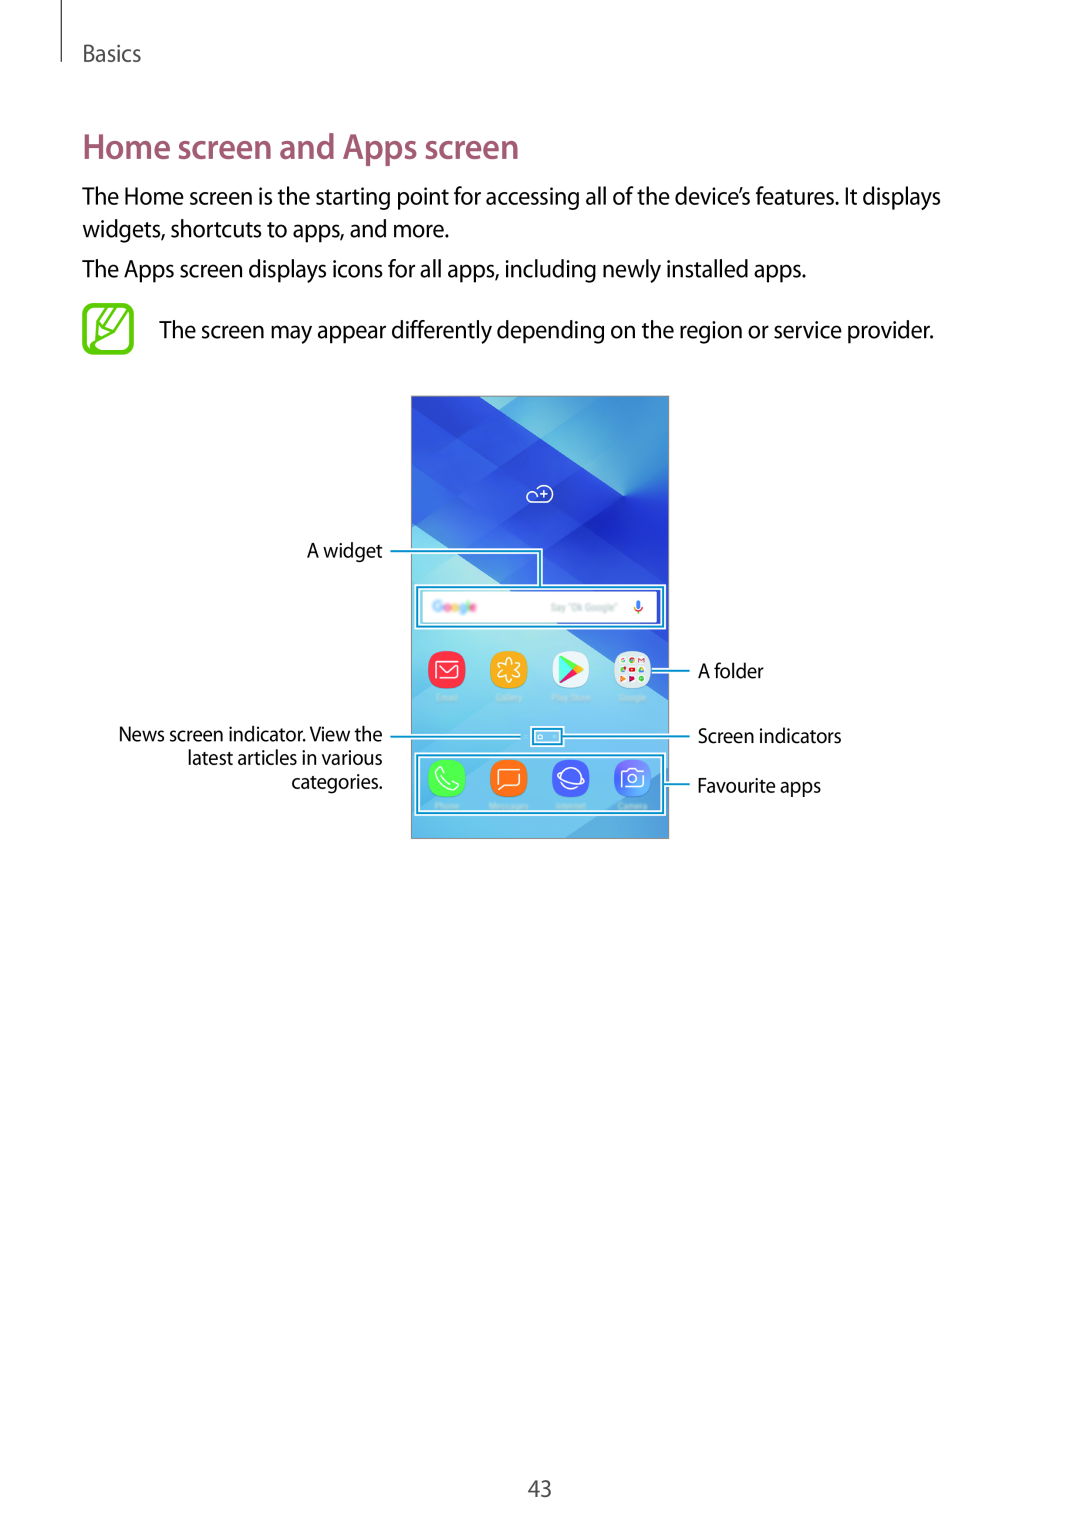 Samsung SM-A320FZBDKSA Home screen and Apps screen, Basics, A widget, A folder, latest articles in various, categories 